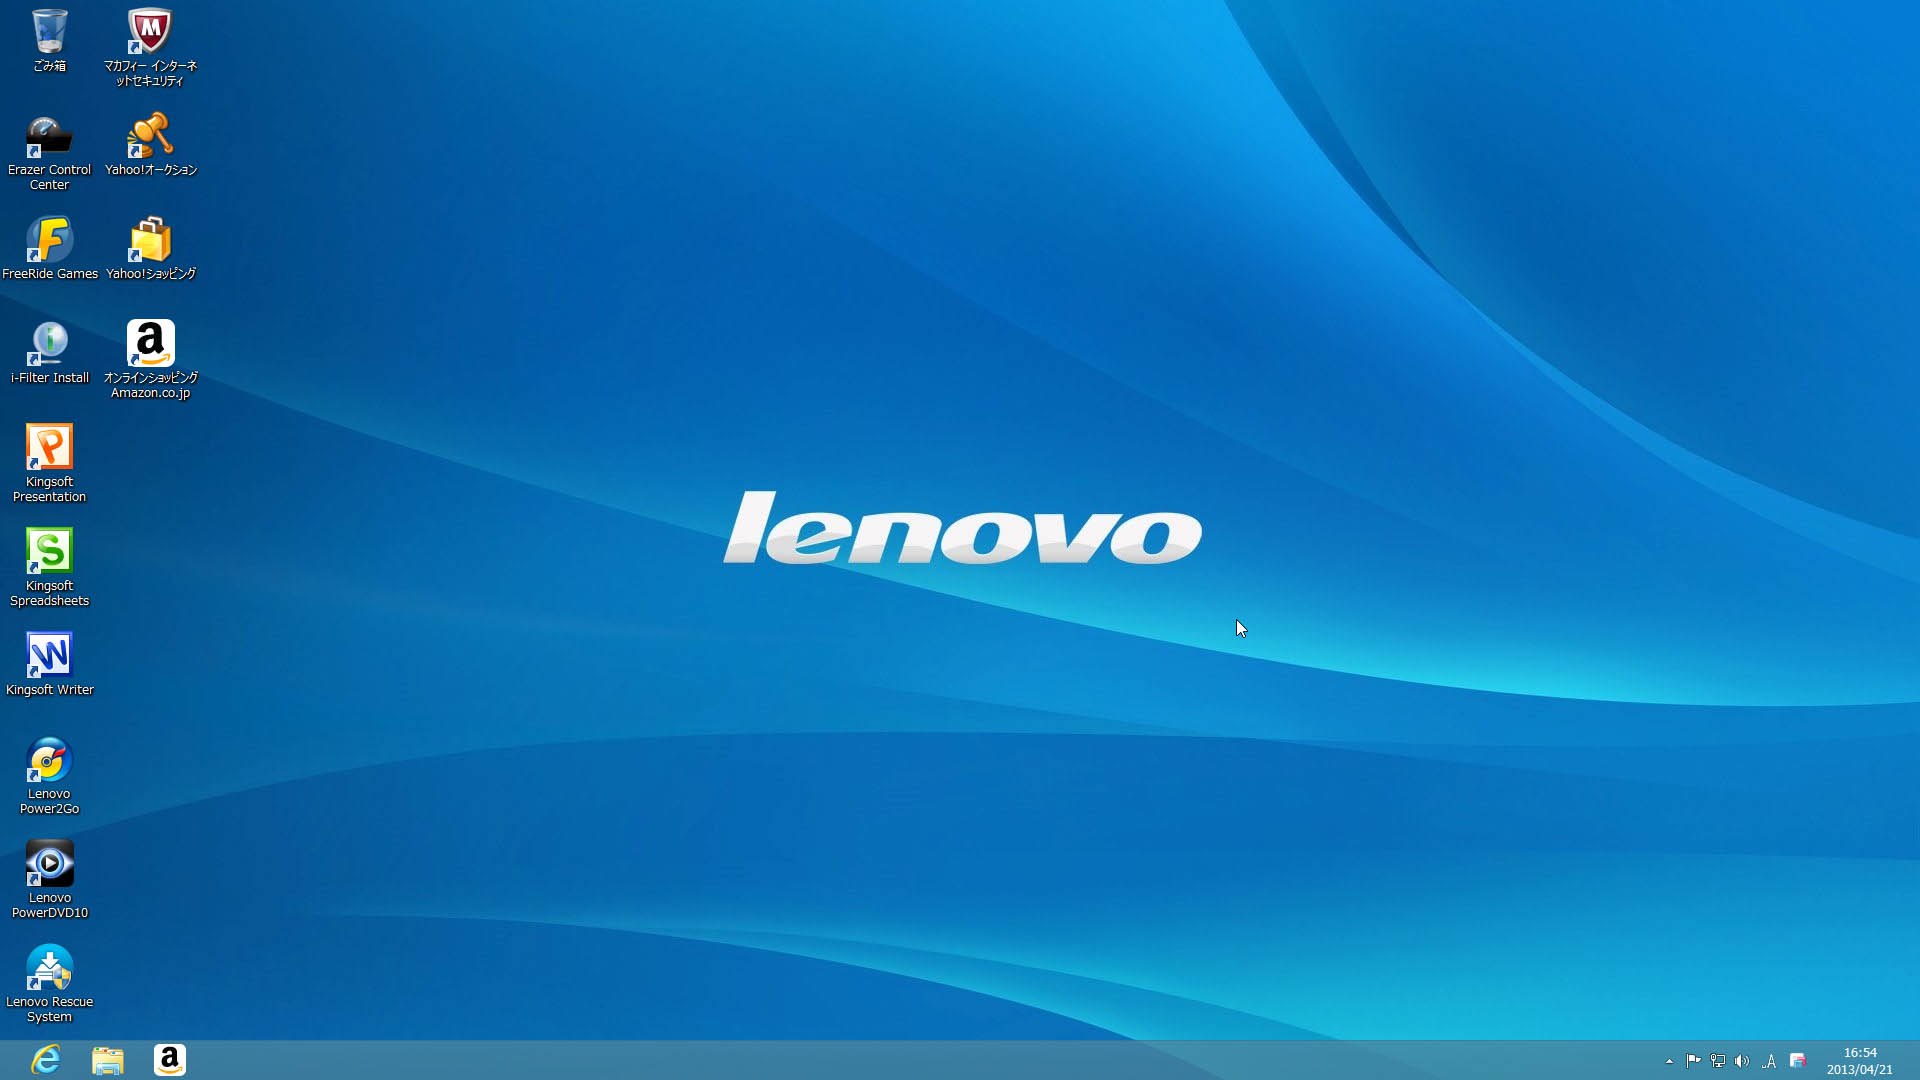 Lenovo Windows Wallpaper Car Tuning